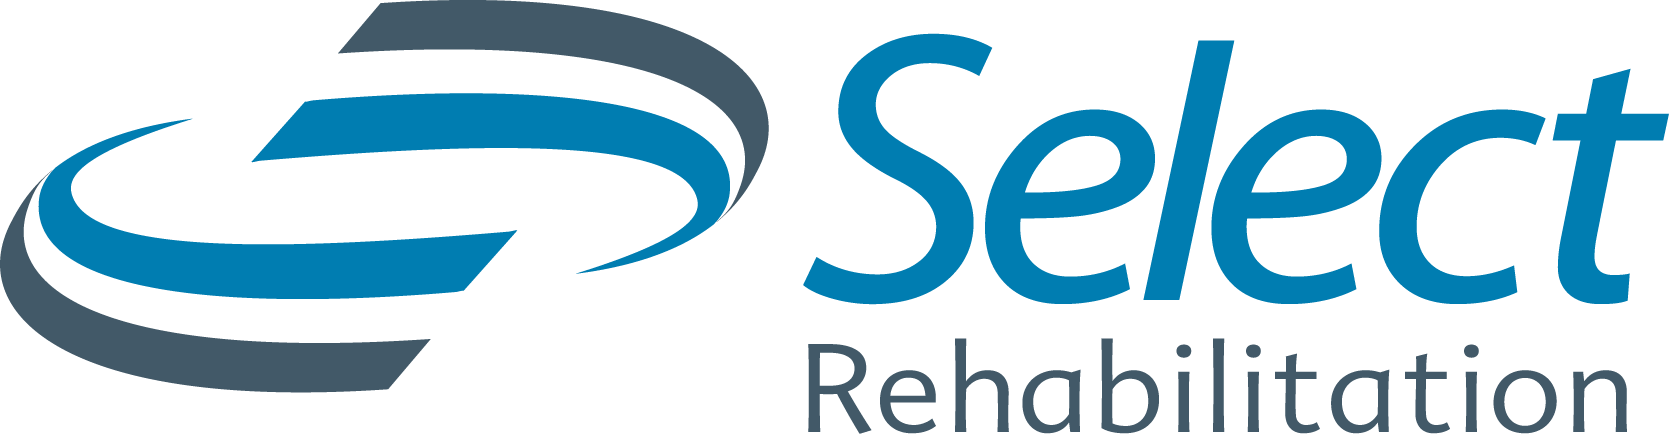 Select_Rehab_Logo